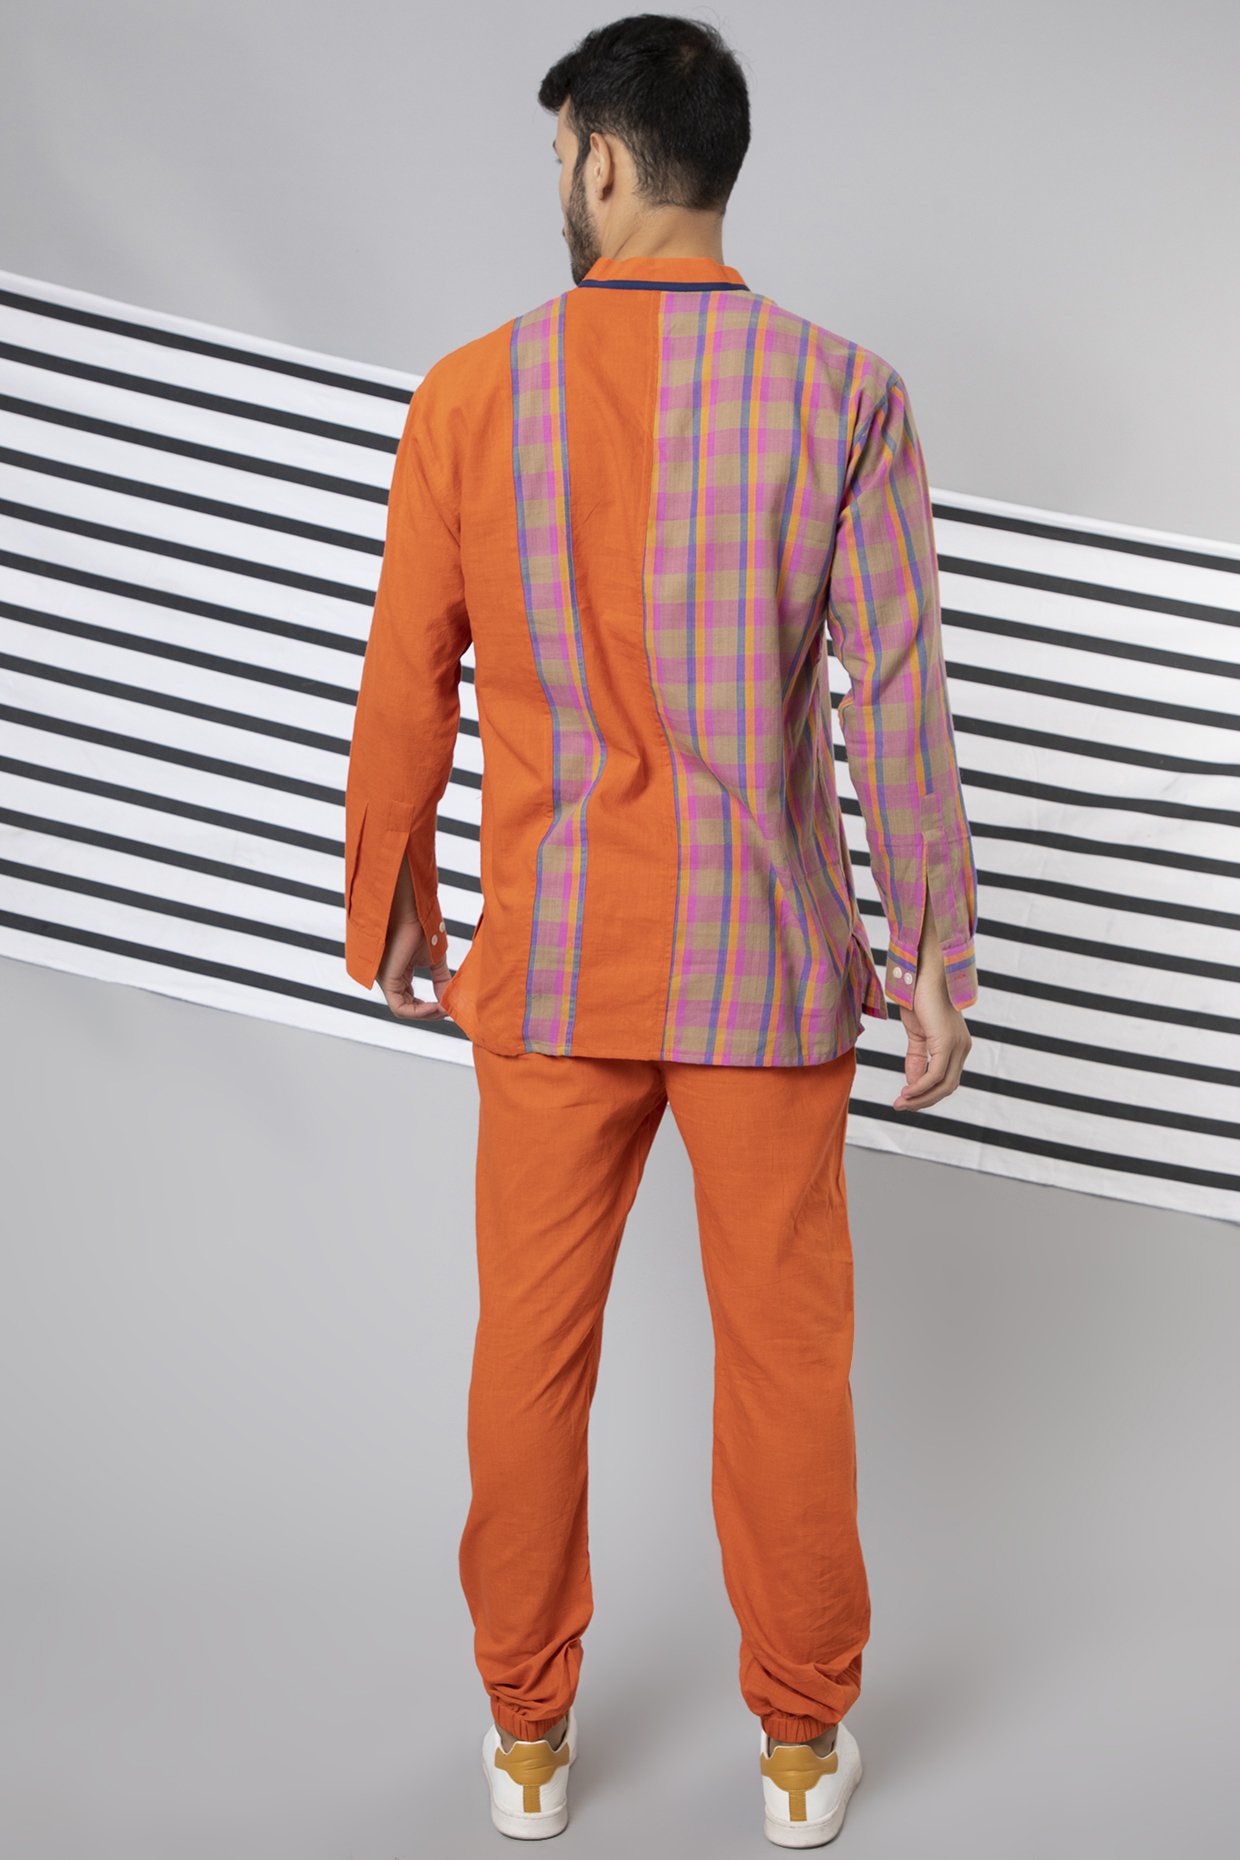 Orange Suit with Brown Shirt Ritzy Look | Hockerty